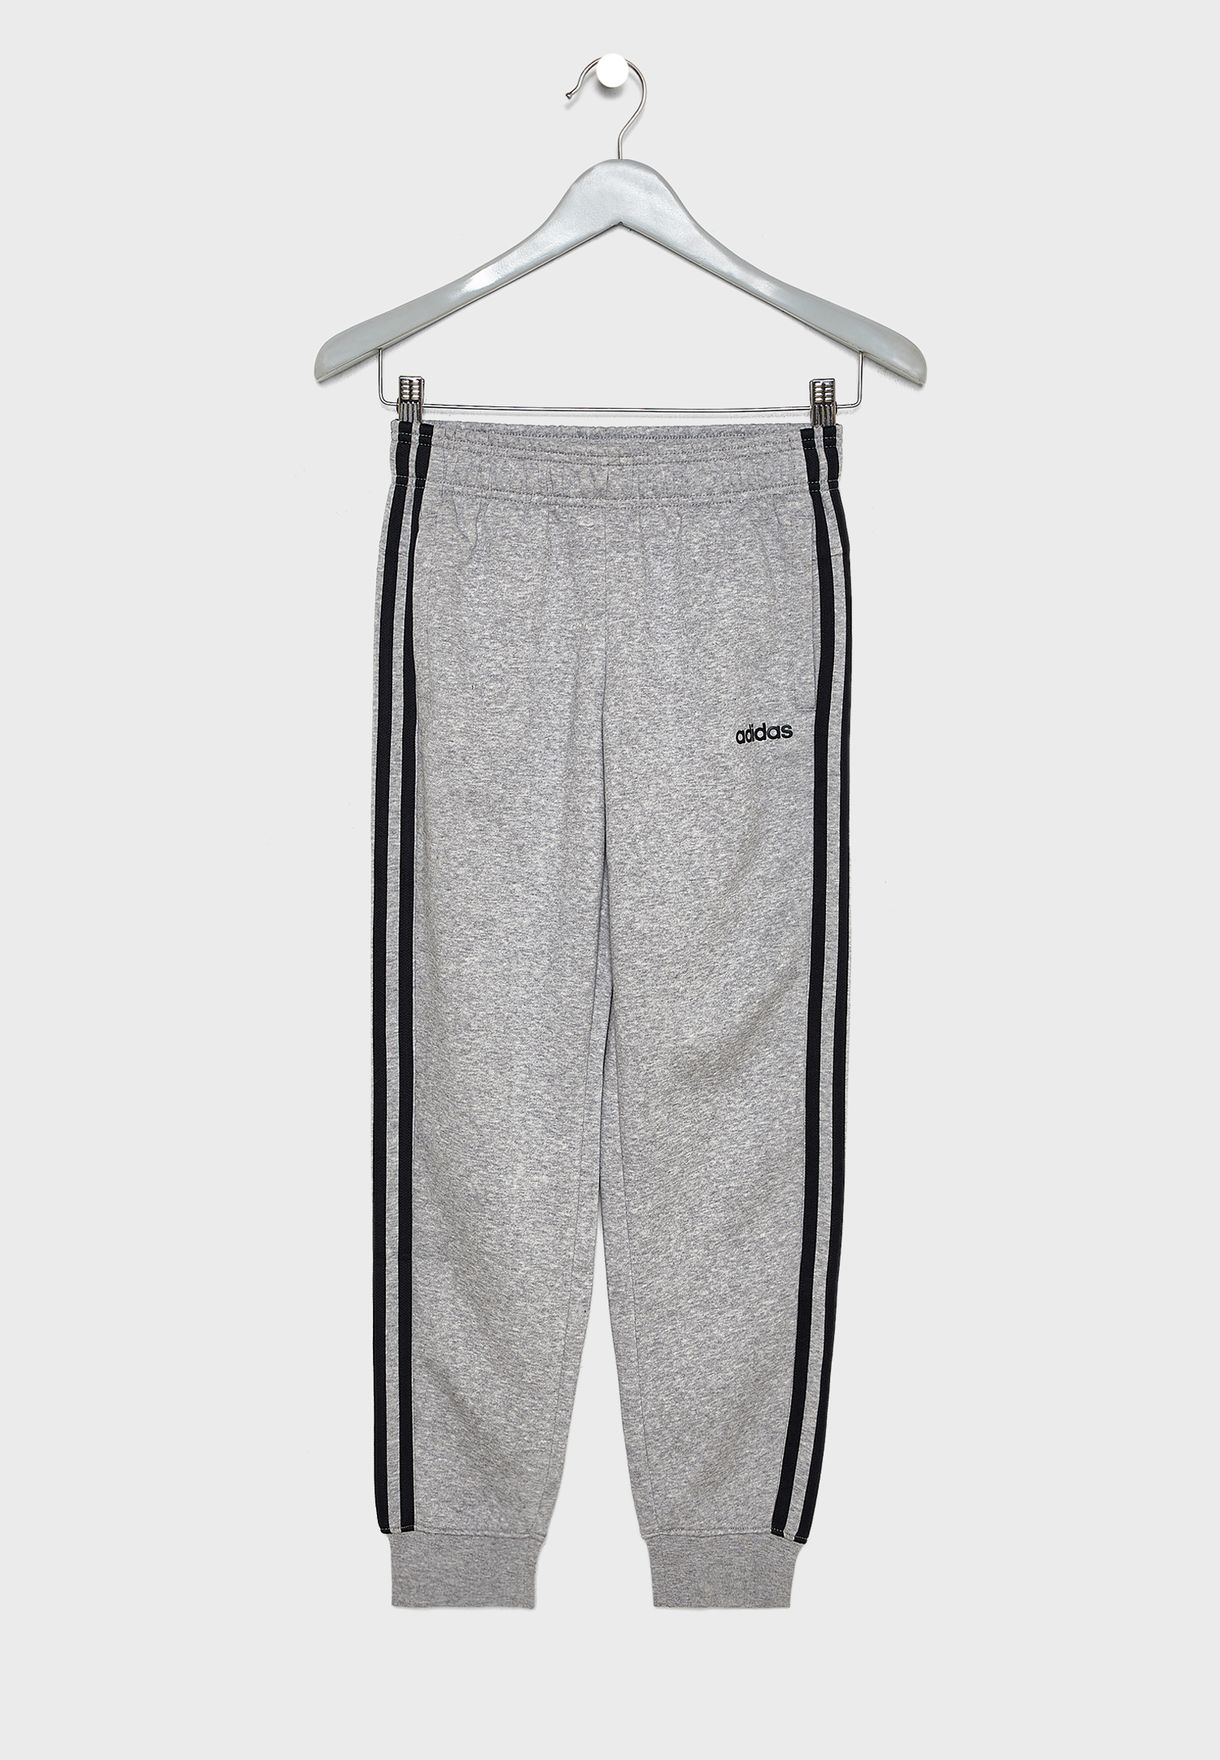 grey adidas sweatpants